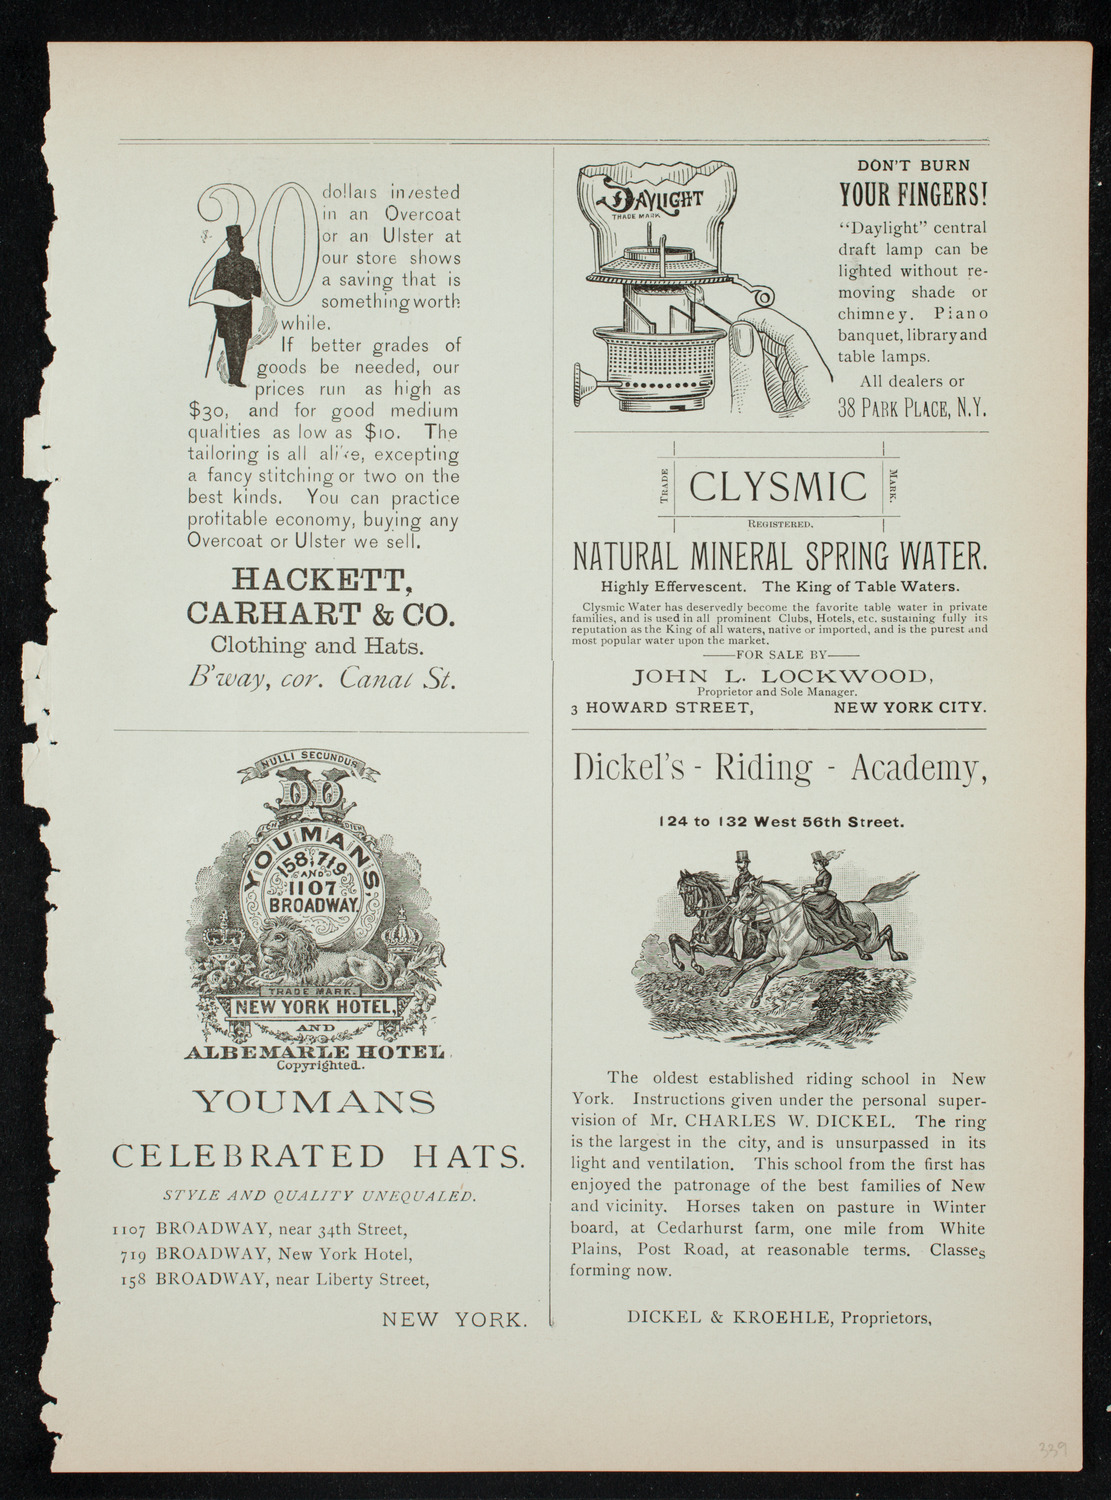 New York Athletic Club Amateur Minstrel Show, December 12, 1891, program page 15